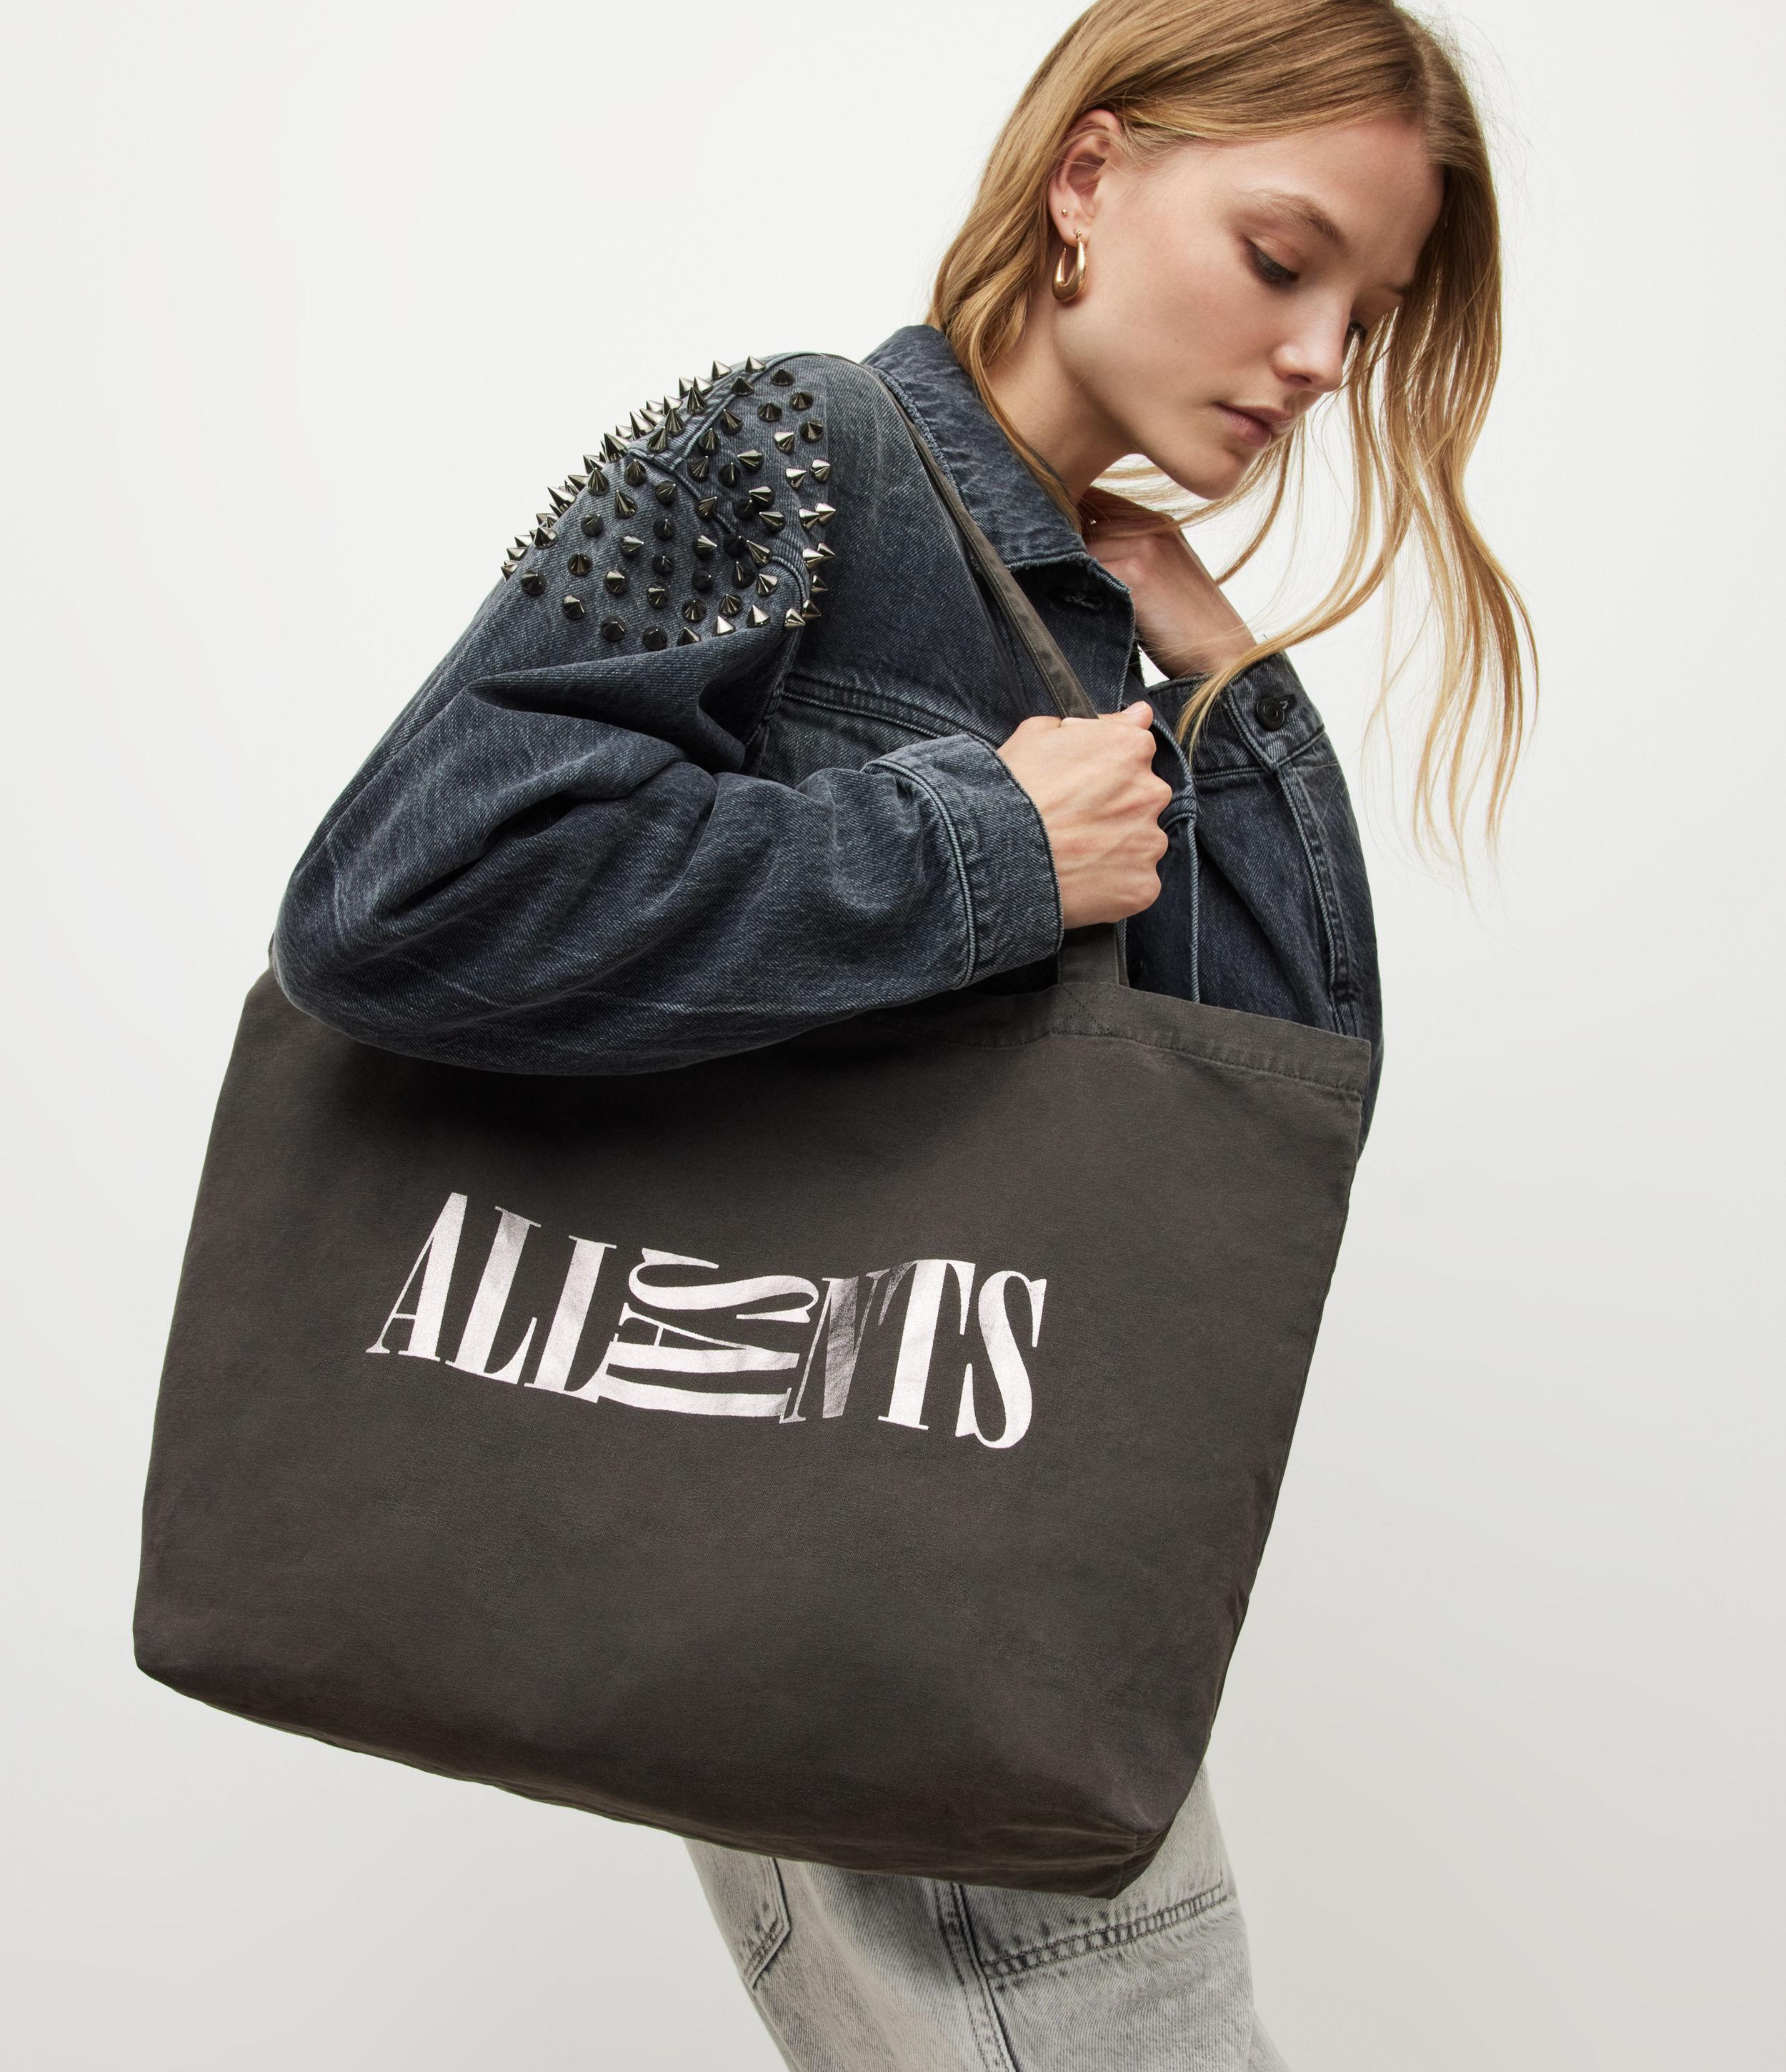 AllSaints Women's Oppose Shopper Tote Bag in Black | Lyst